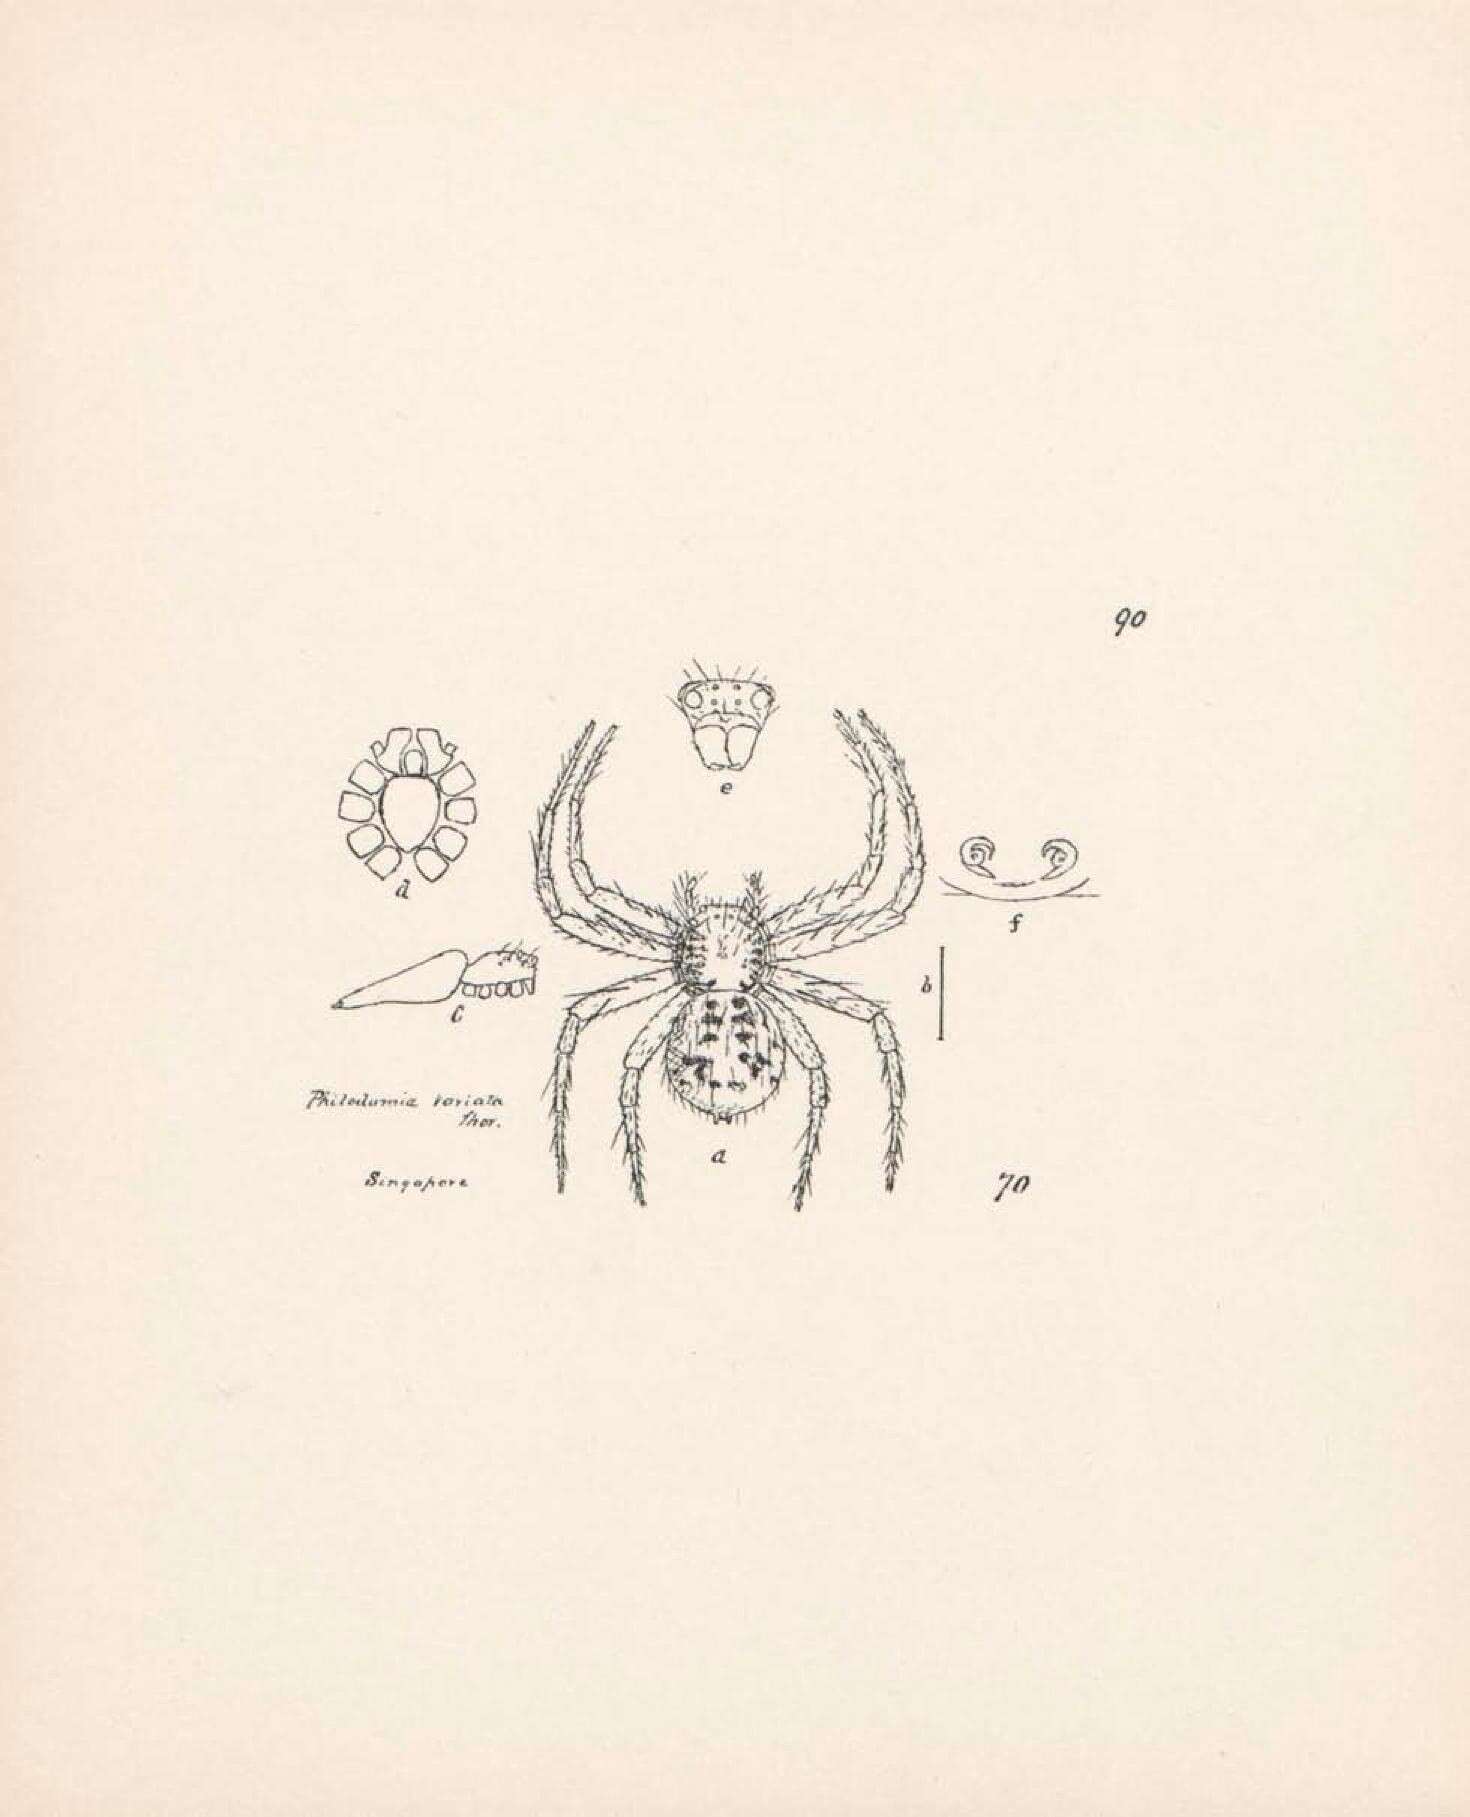 Image de Philodamia variata Thorell 1894